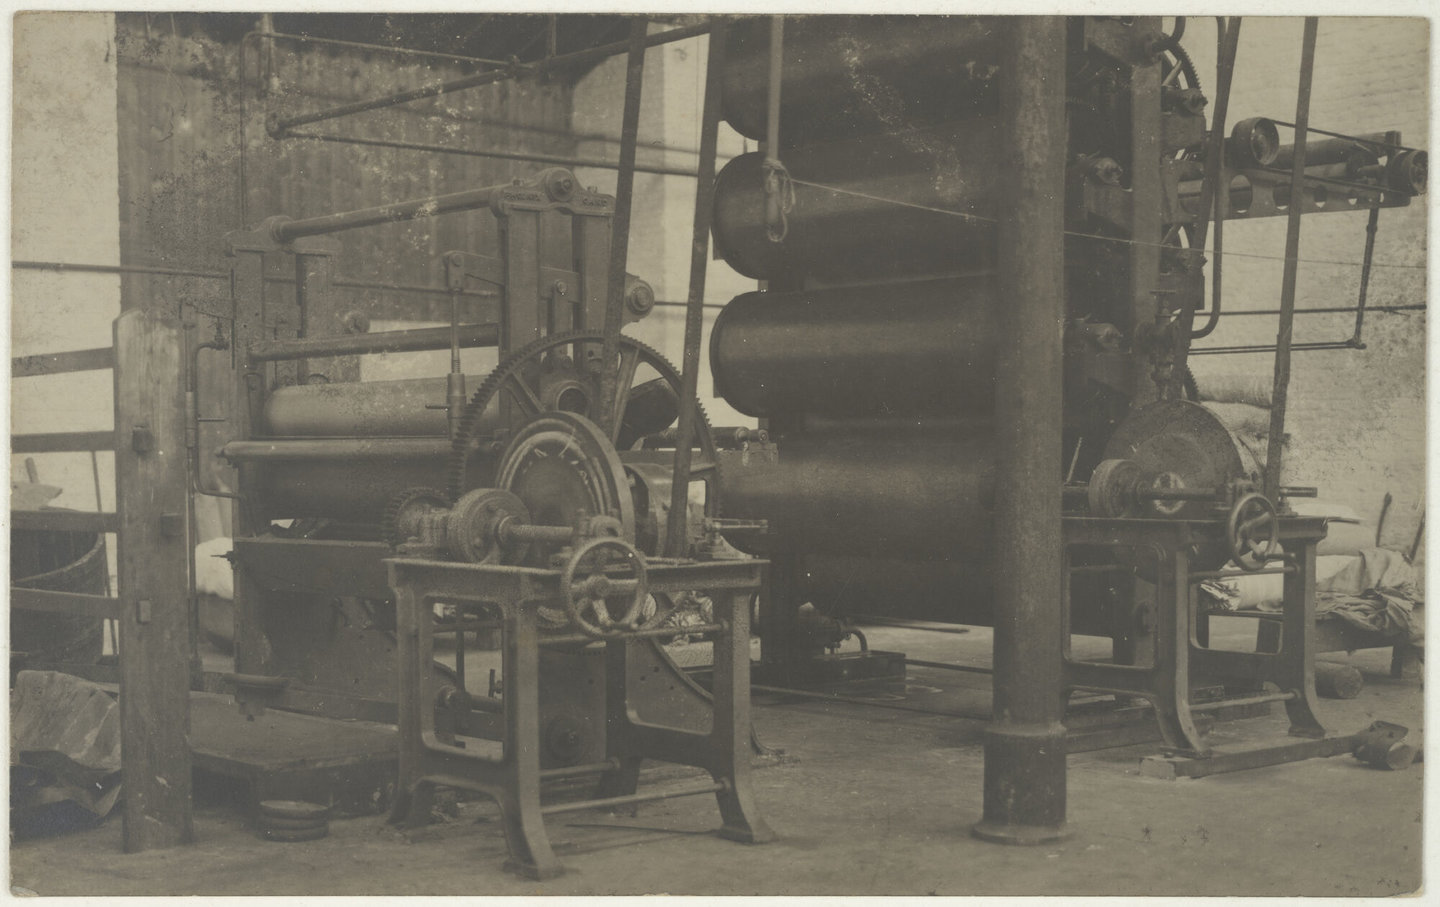 Machinewerkplaats met walsmachine van tandwielfabrikant Feys in Kortrijk